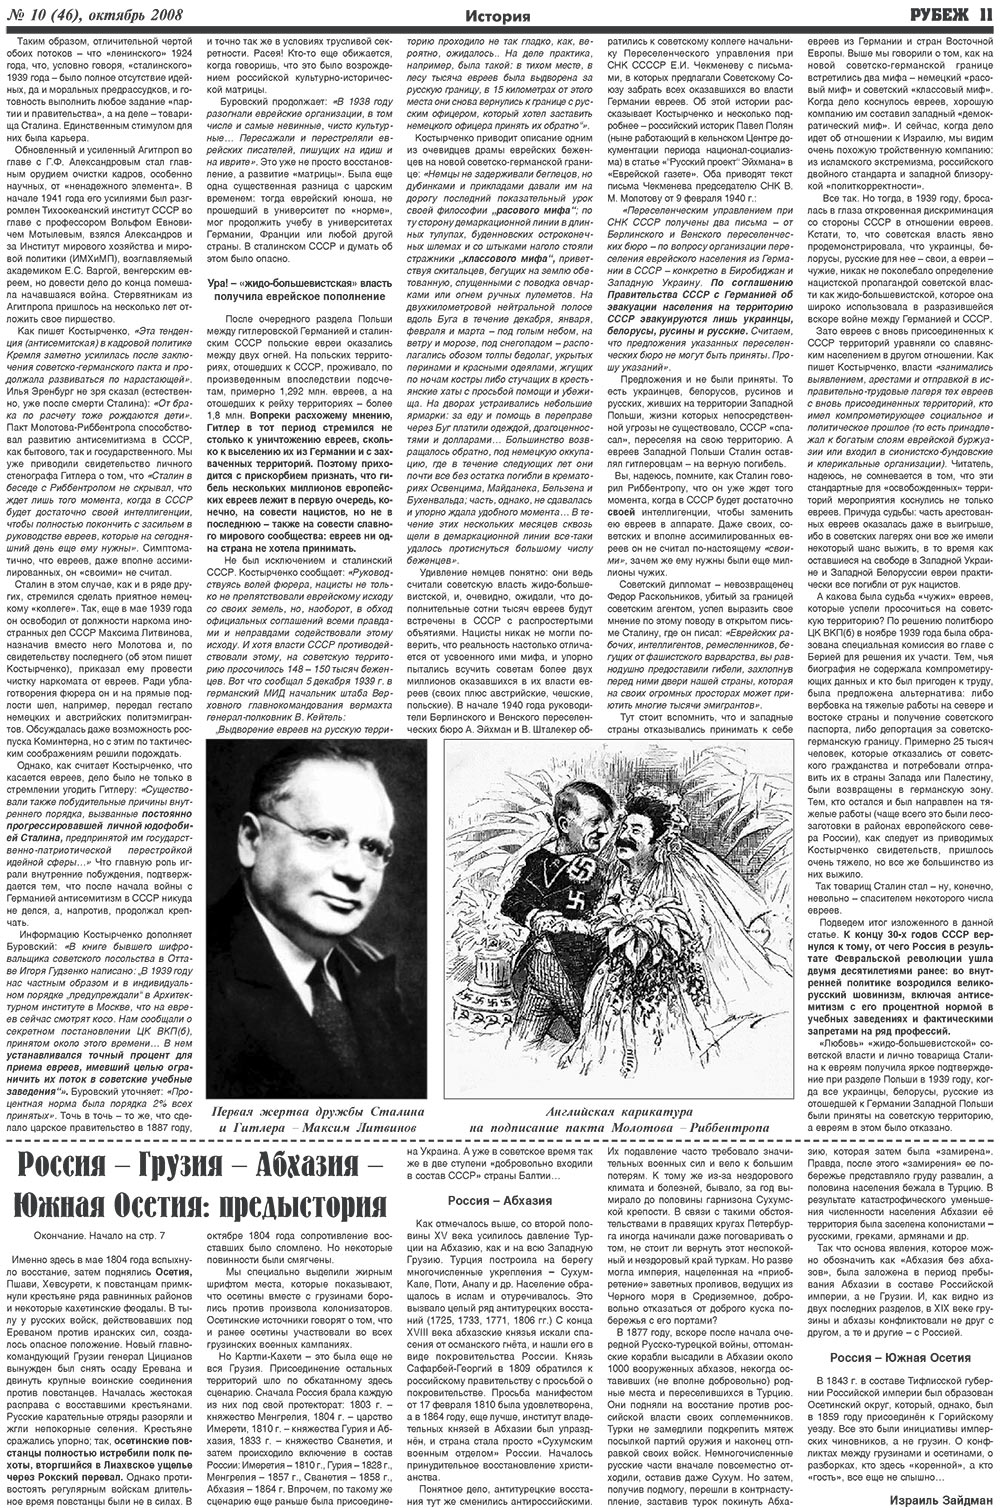 Рубеж, газета. 2008 №10 стр.11